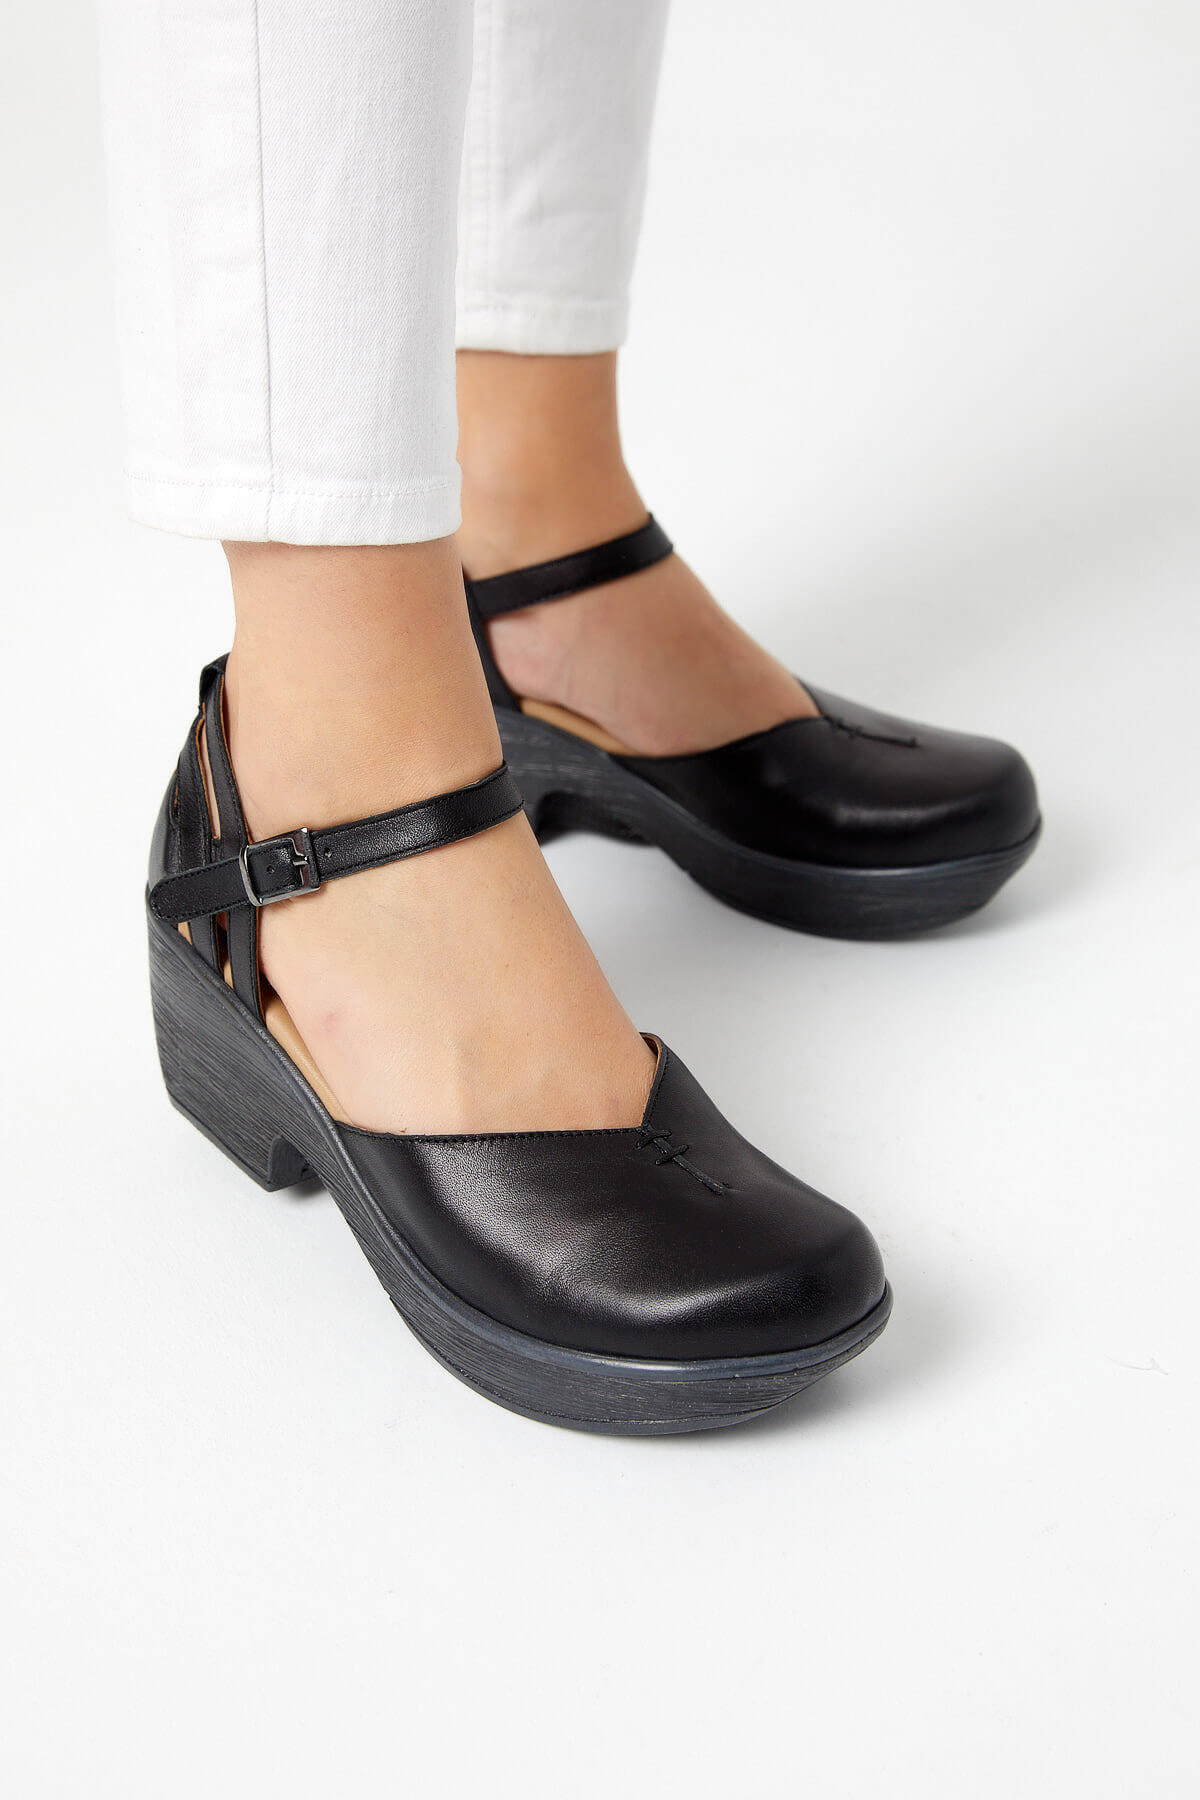 Kadın Apartman Topuk Deri Ayakkabı Siyah 1912502